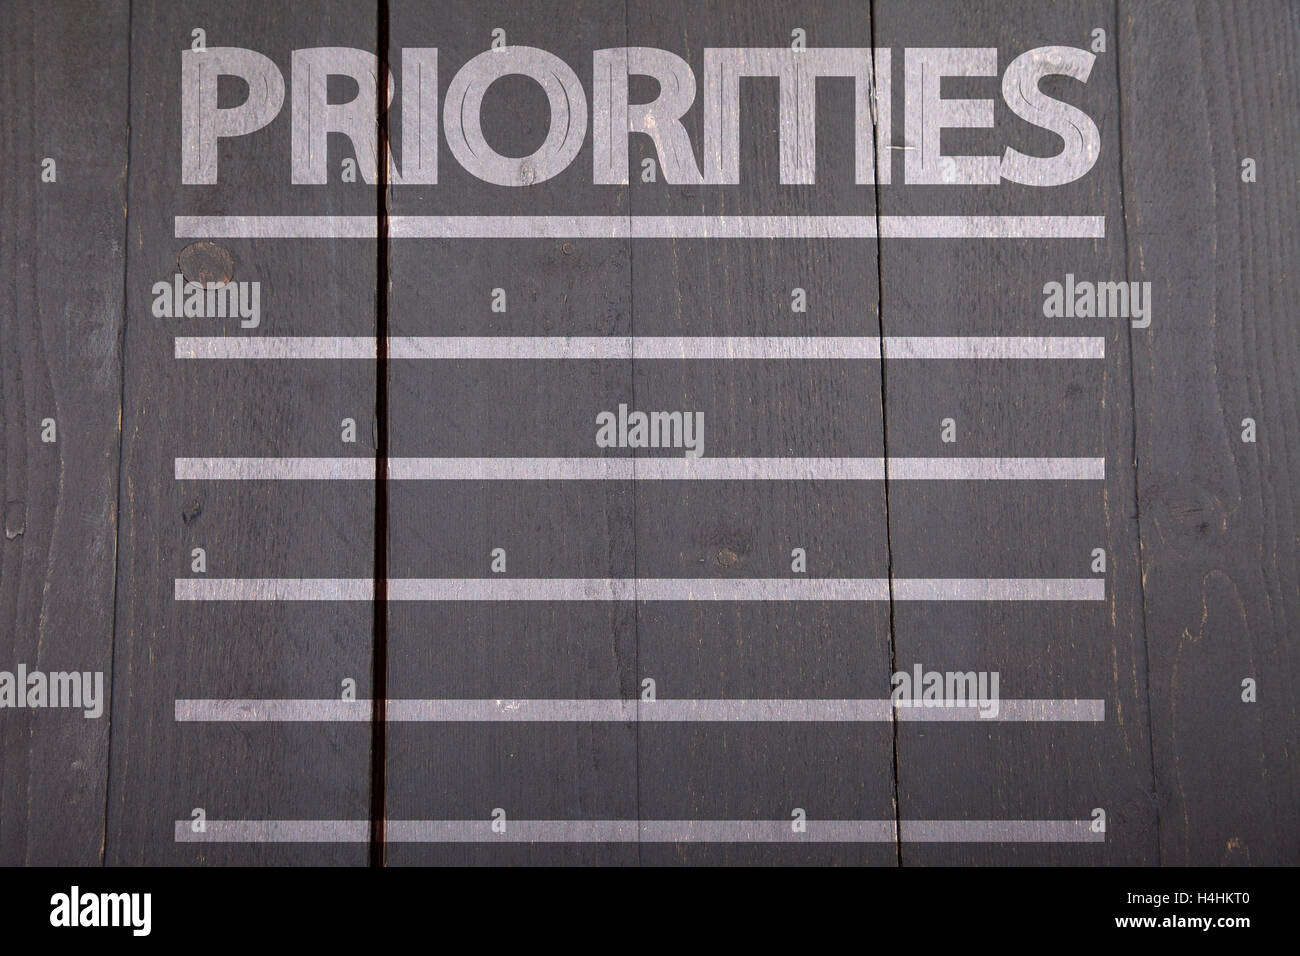 Priorities list on black wooden background Stock Photo